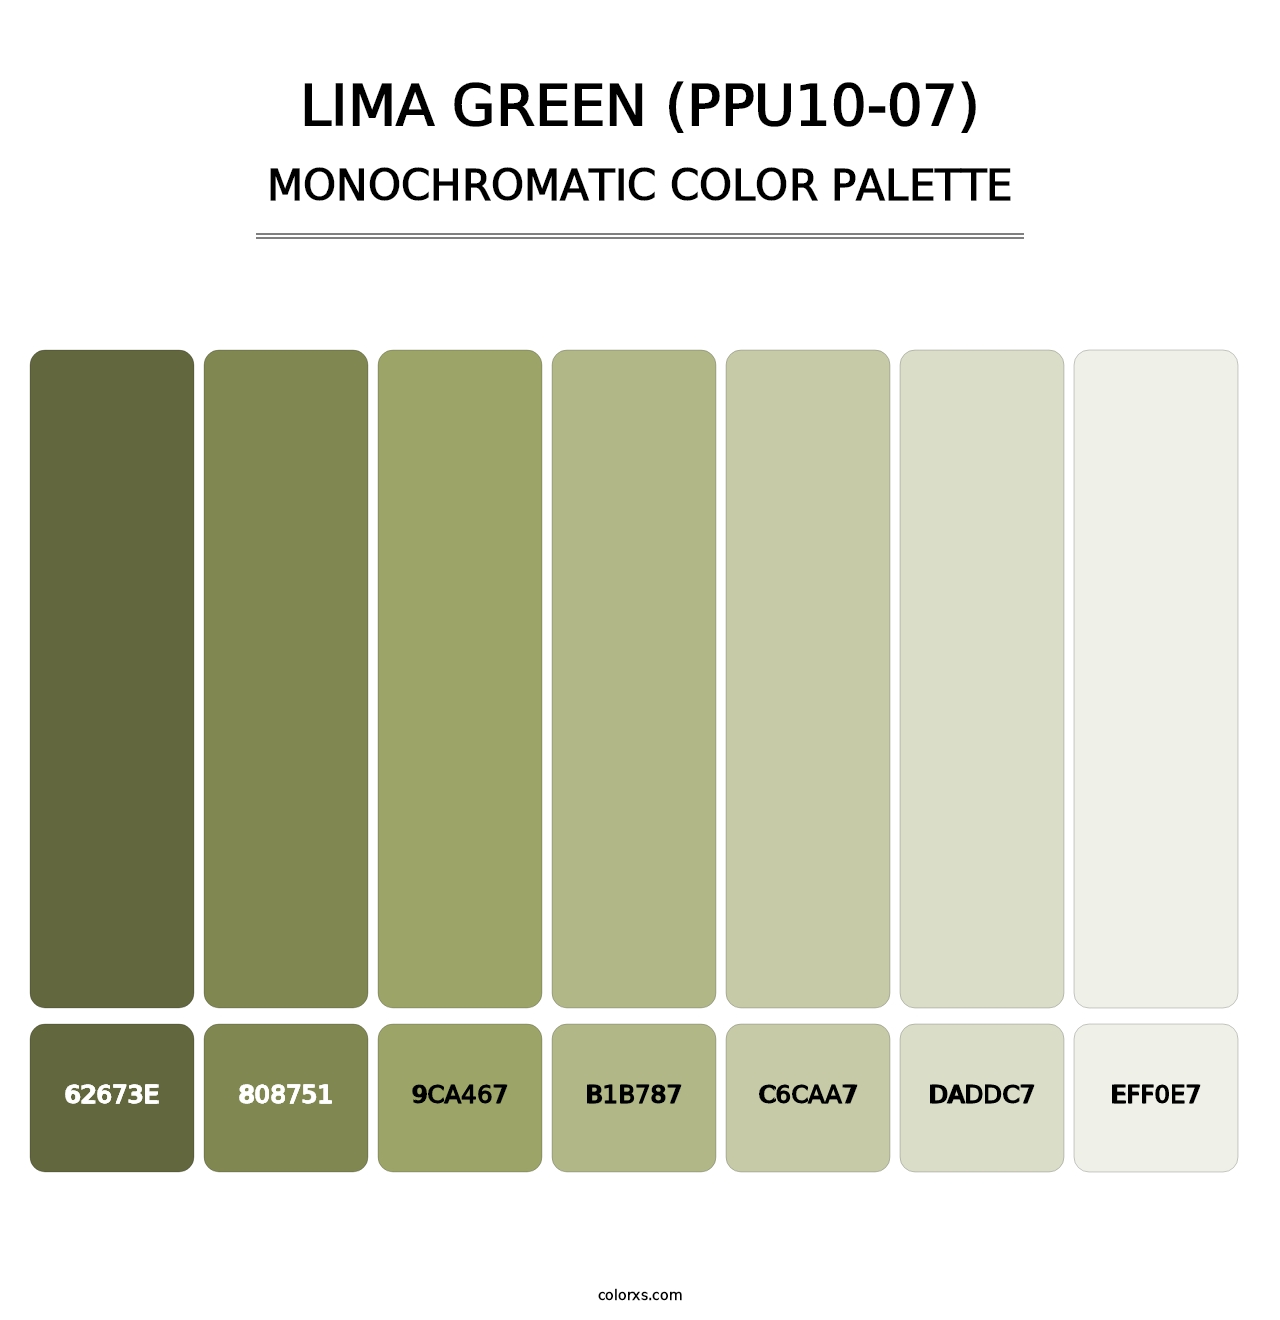 Lima Green (PPU10-07) - Monochromatic Color Palette